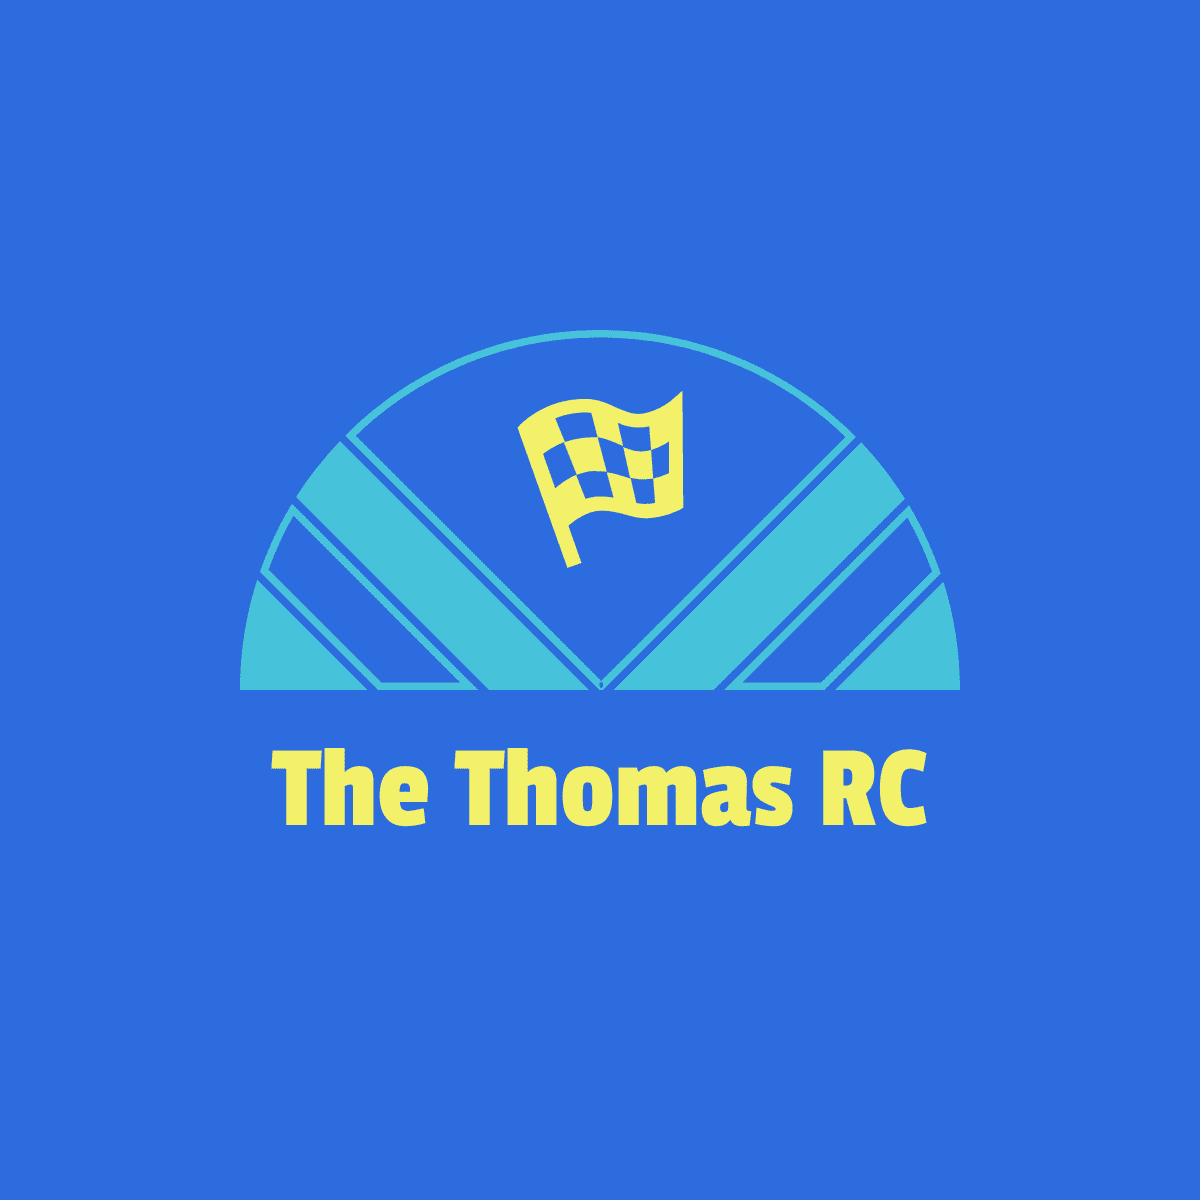 The Thomas RC